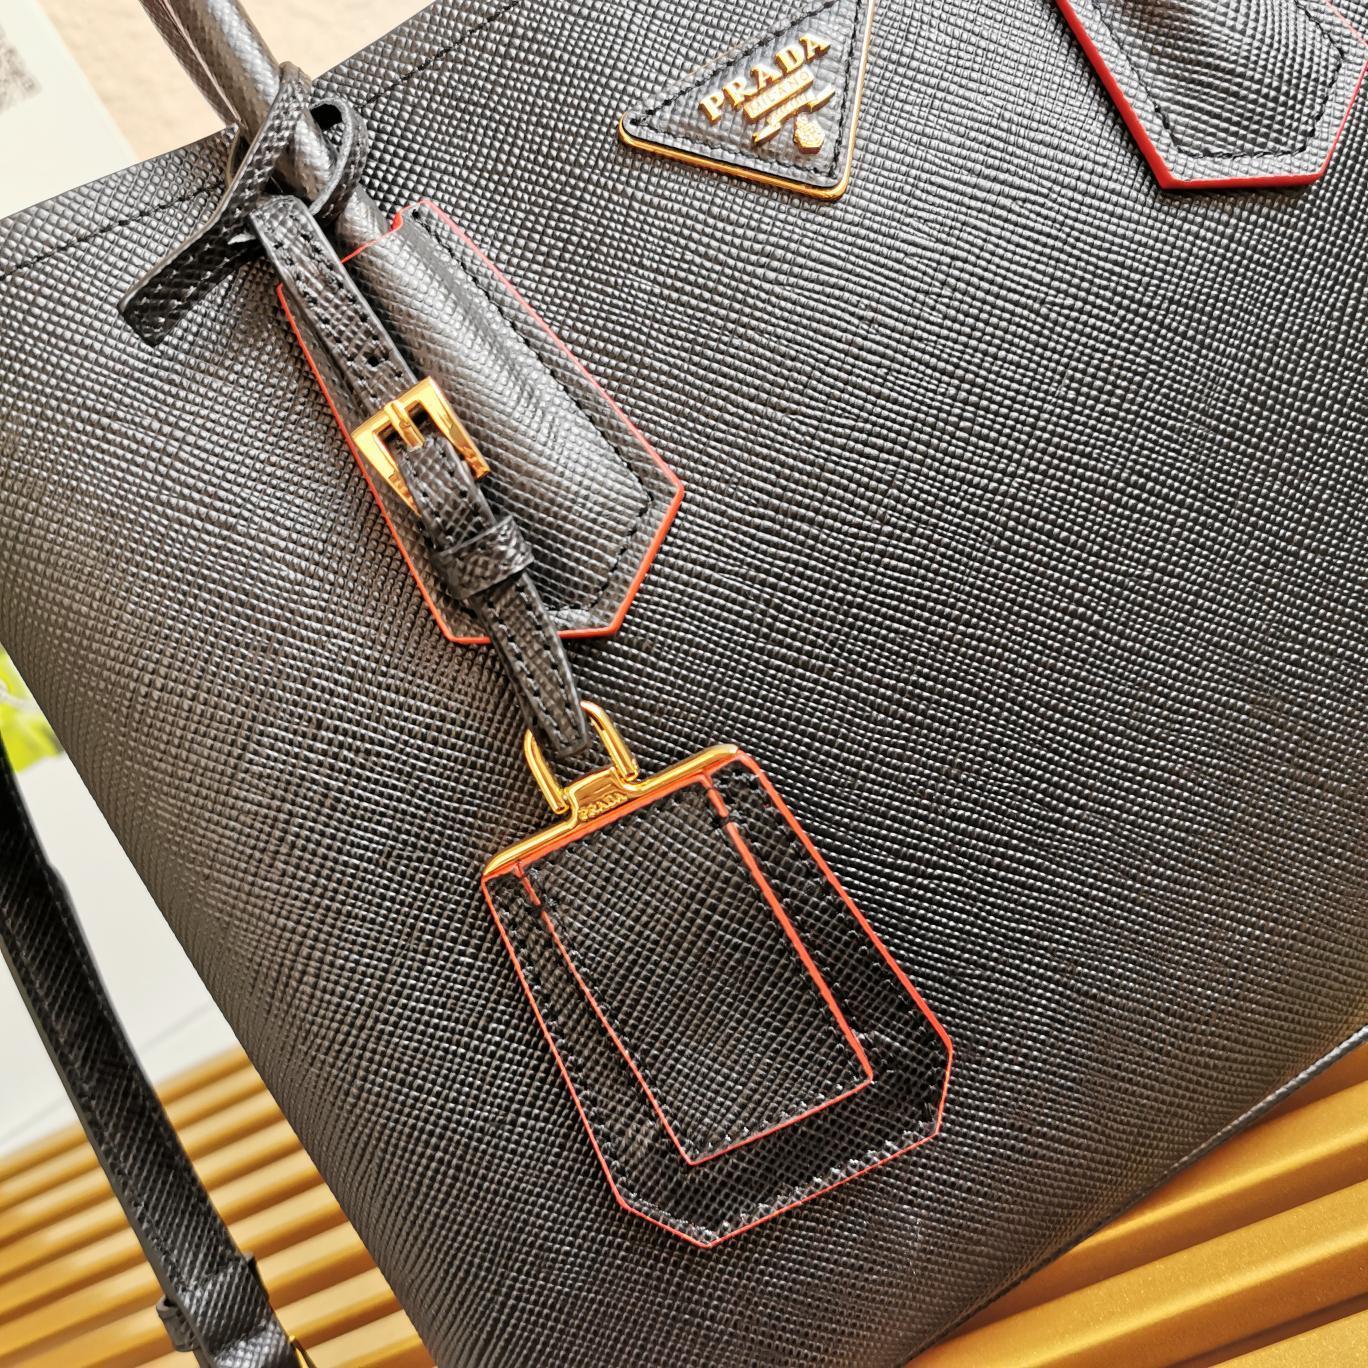 Prada Cuir double zip tote saffiano leather